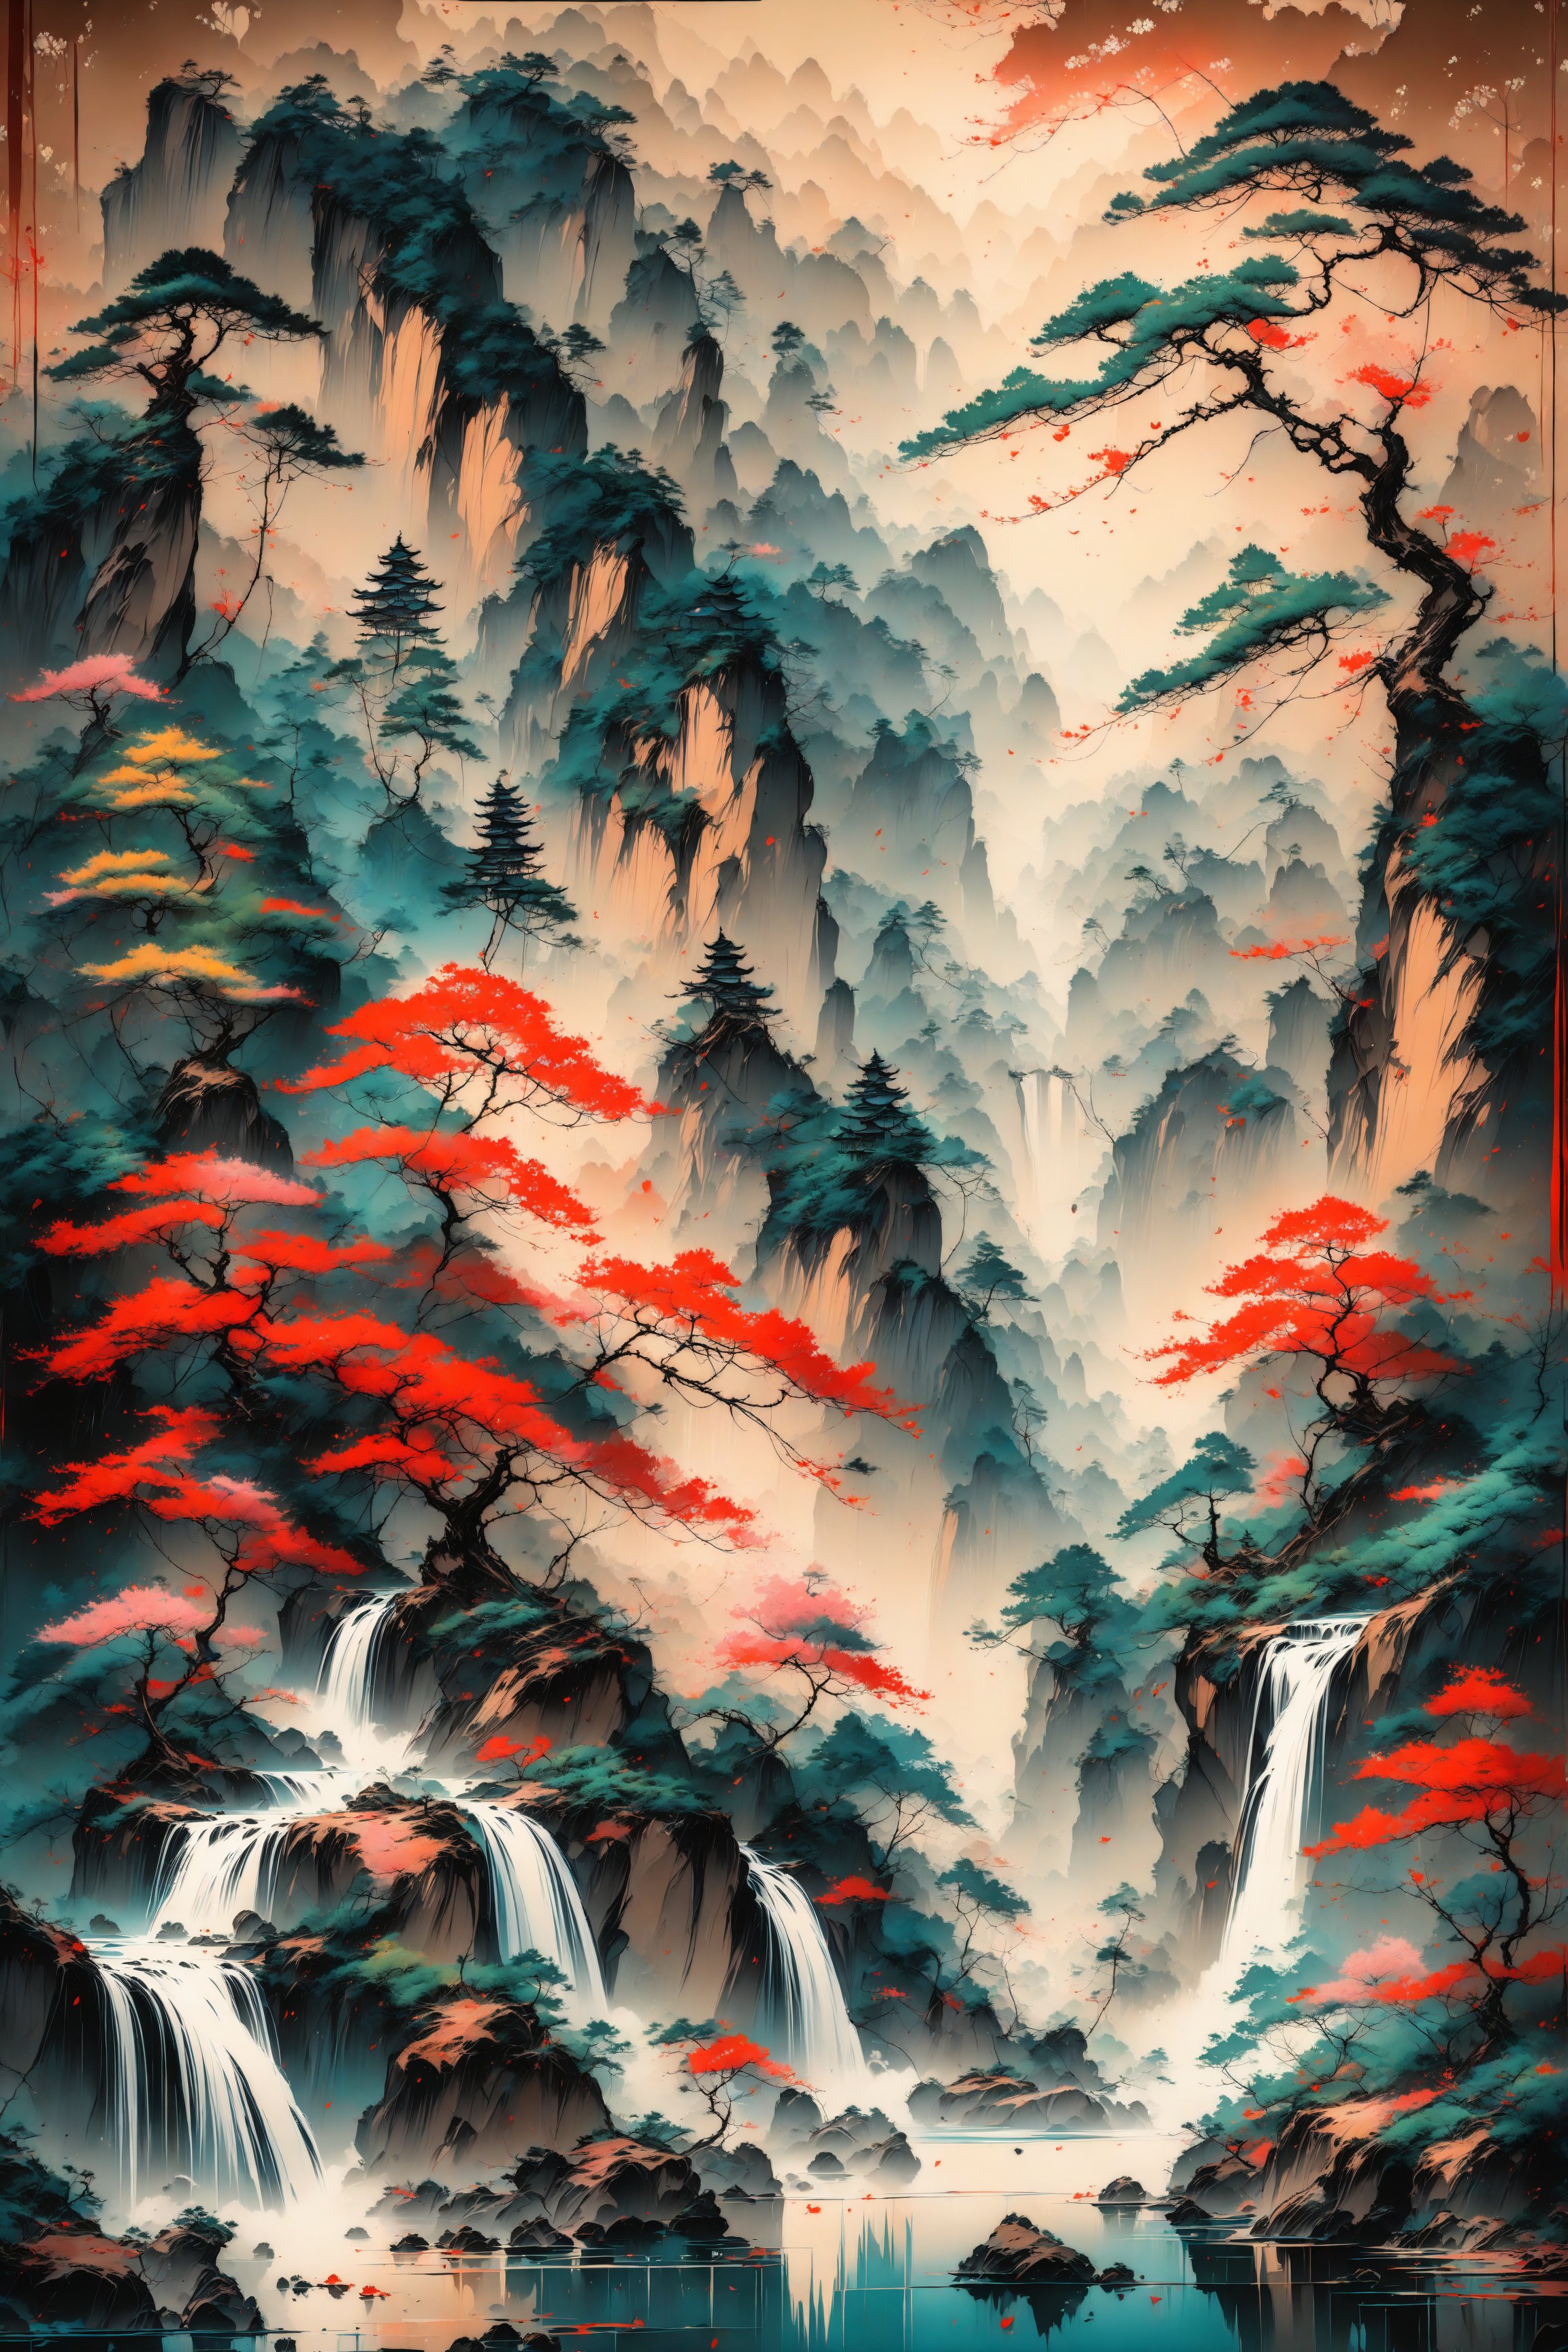 Majestic landscape, stunning image, ((masterpiece: 2)), wallpaper, 8K, ink art, ((sumi-e artstyle: 1.2)), forest, brushstrokes, very beautiful image.